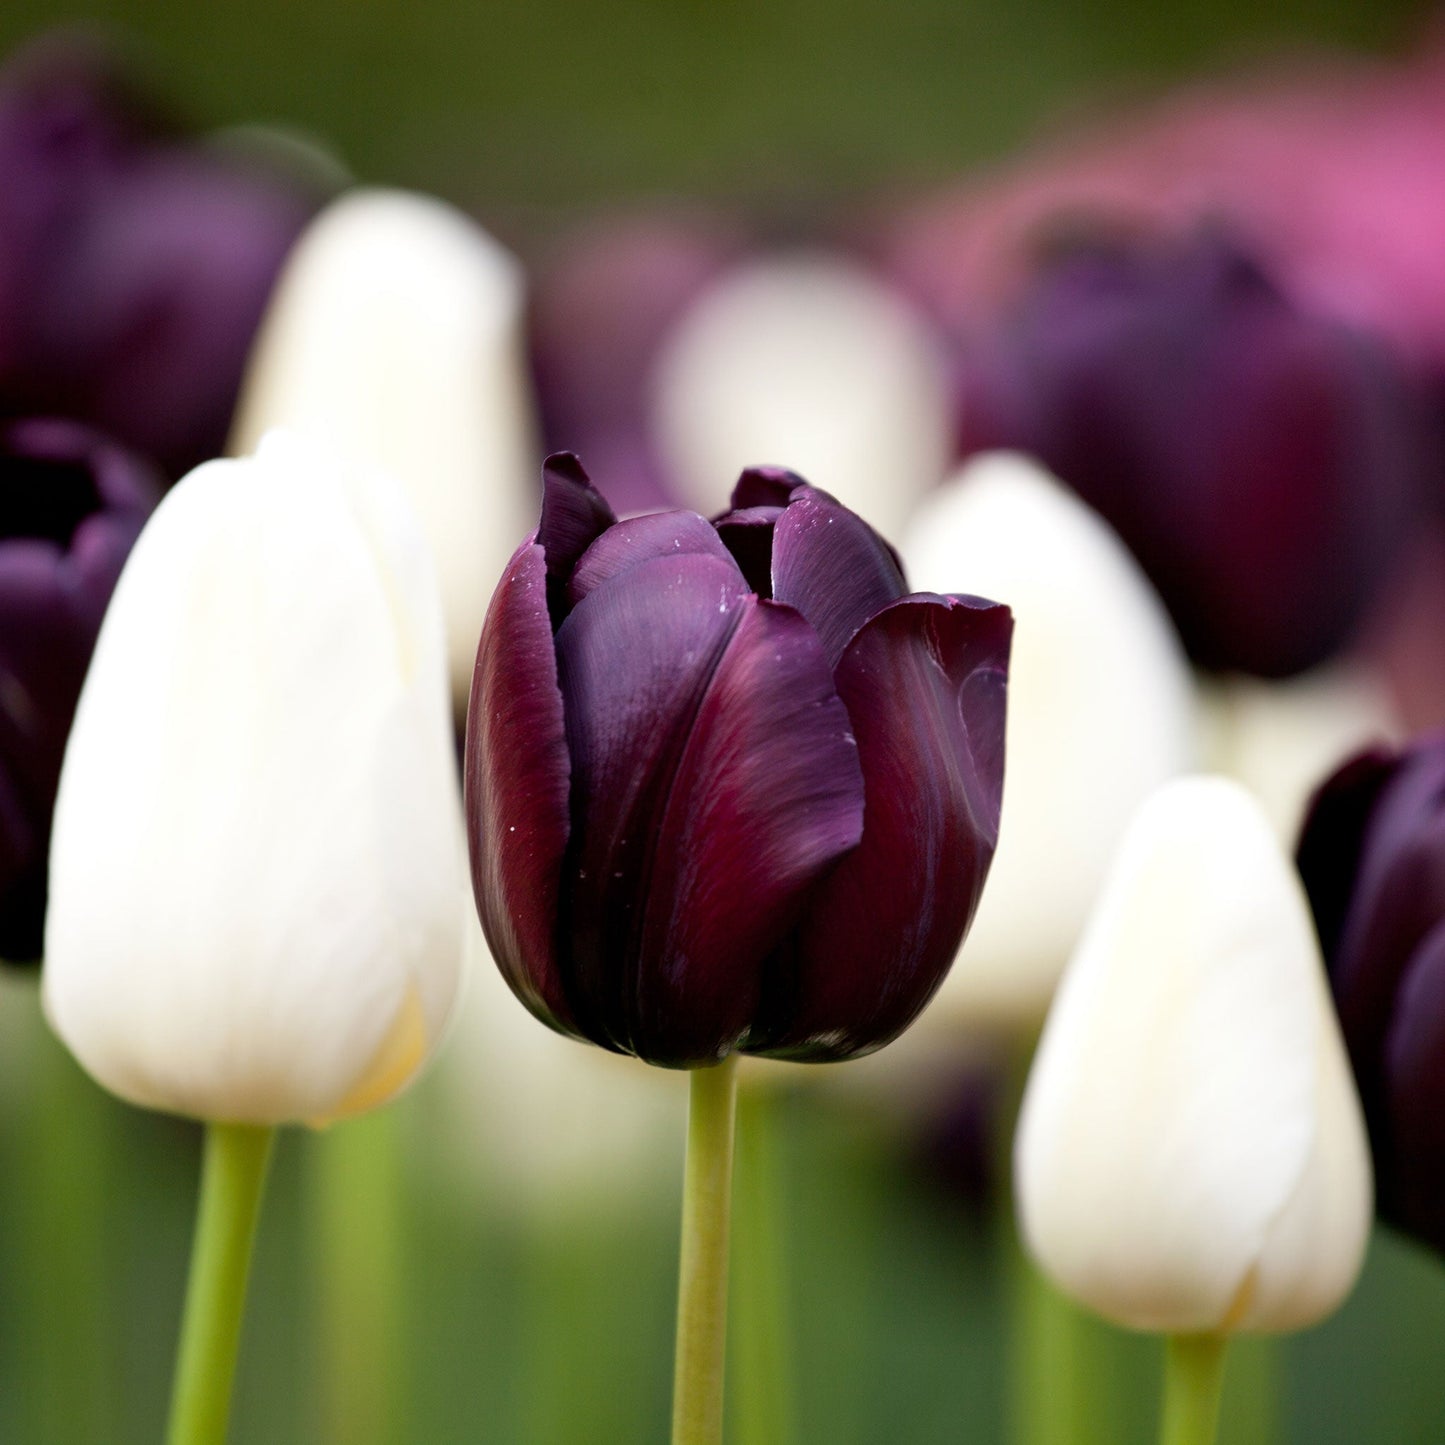 Tulip Bulbs - Queen of the Night